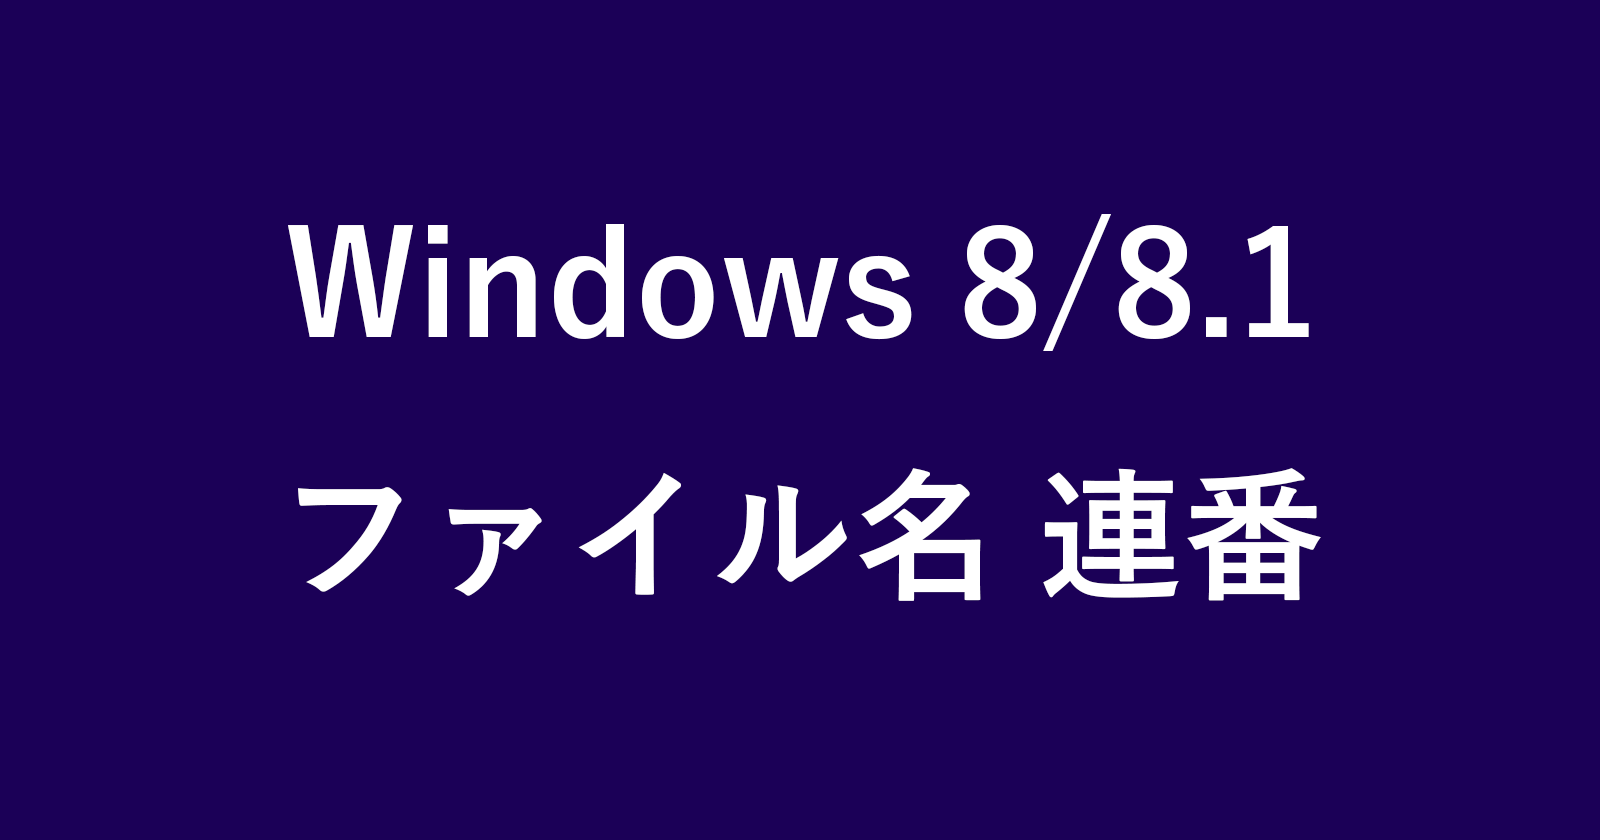 windows8 multiple filename